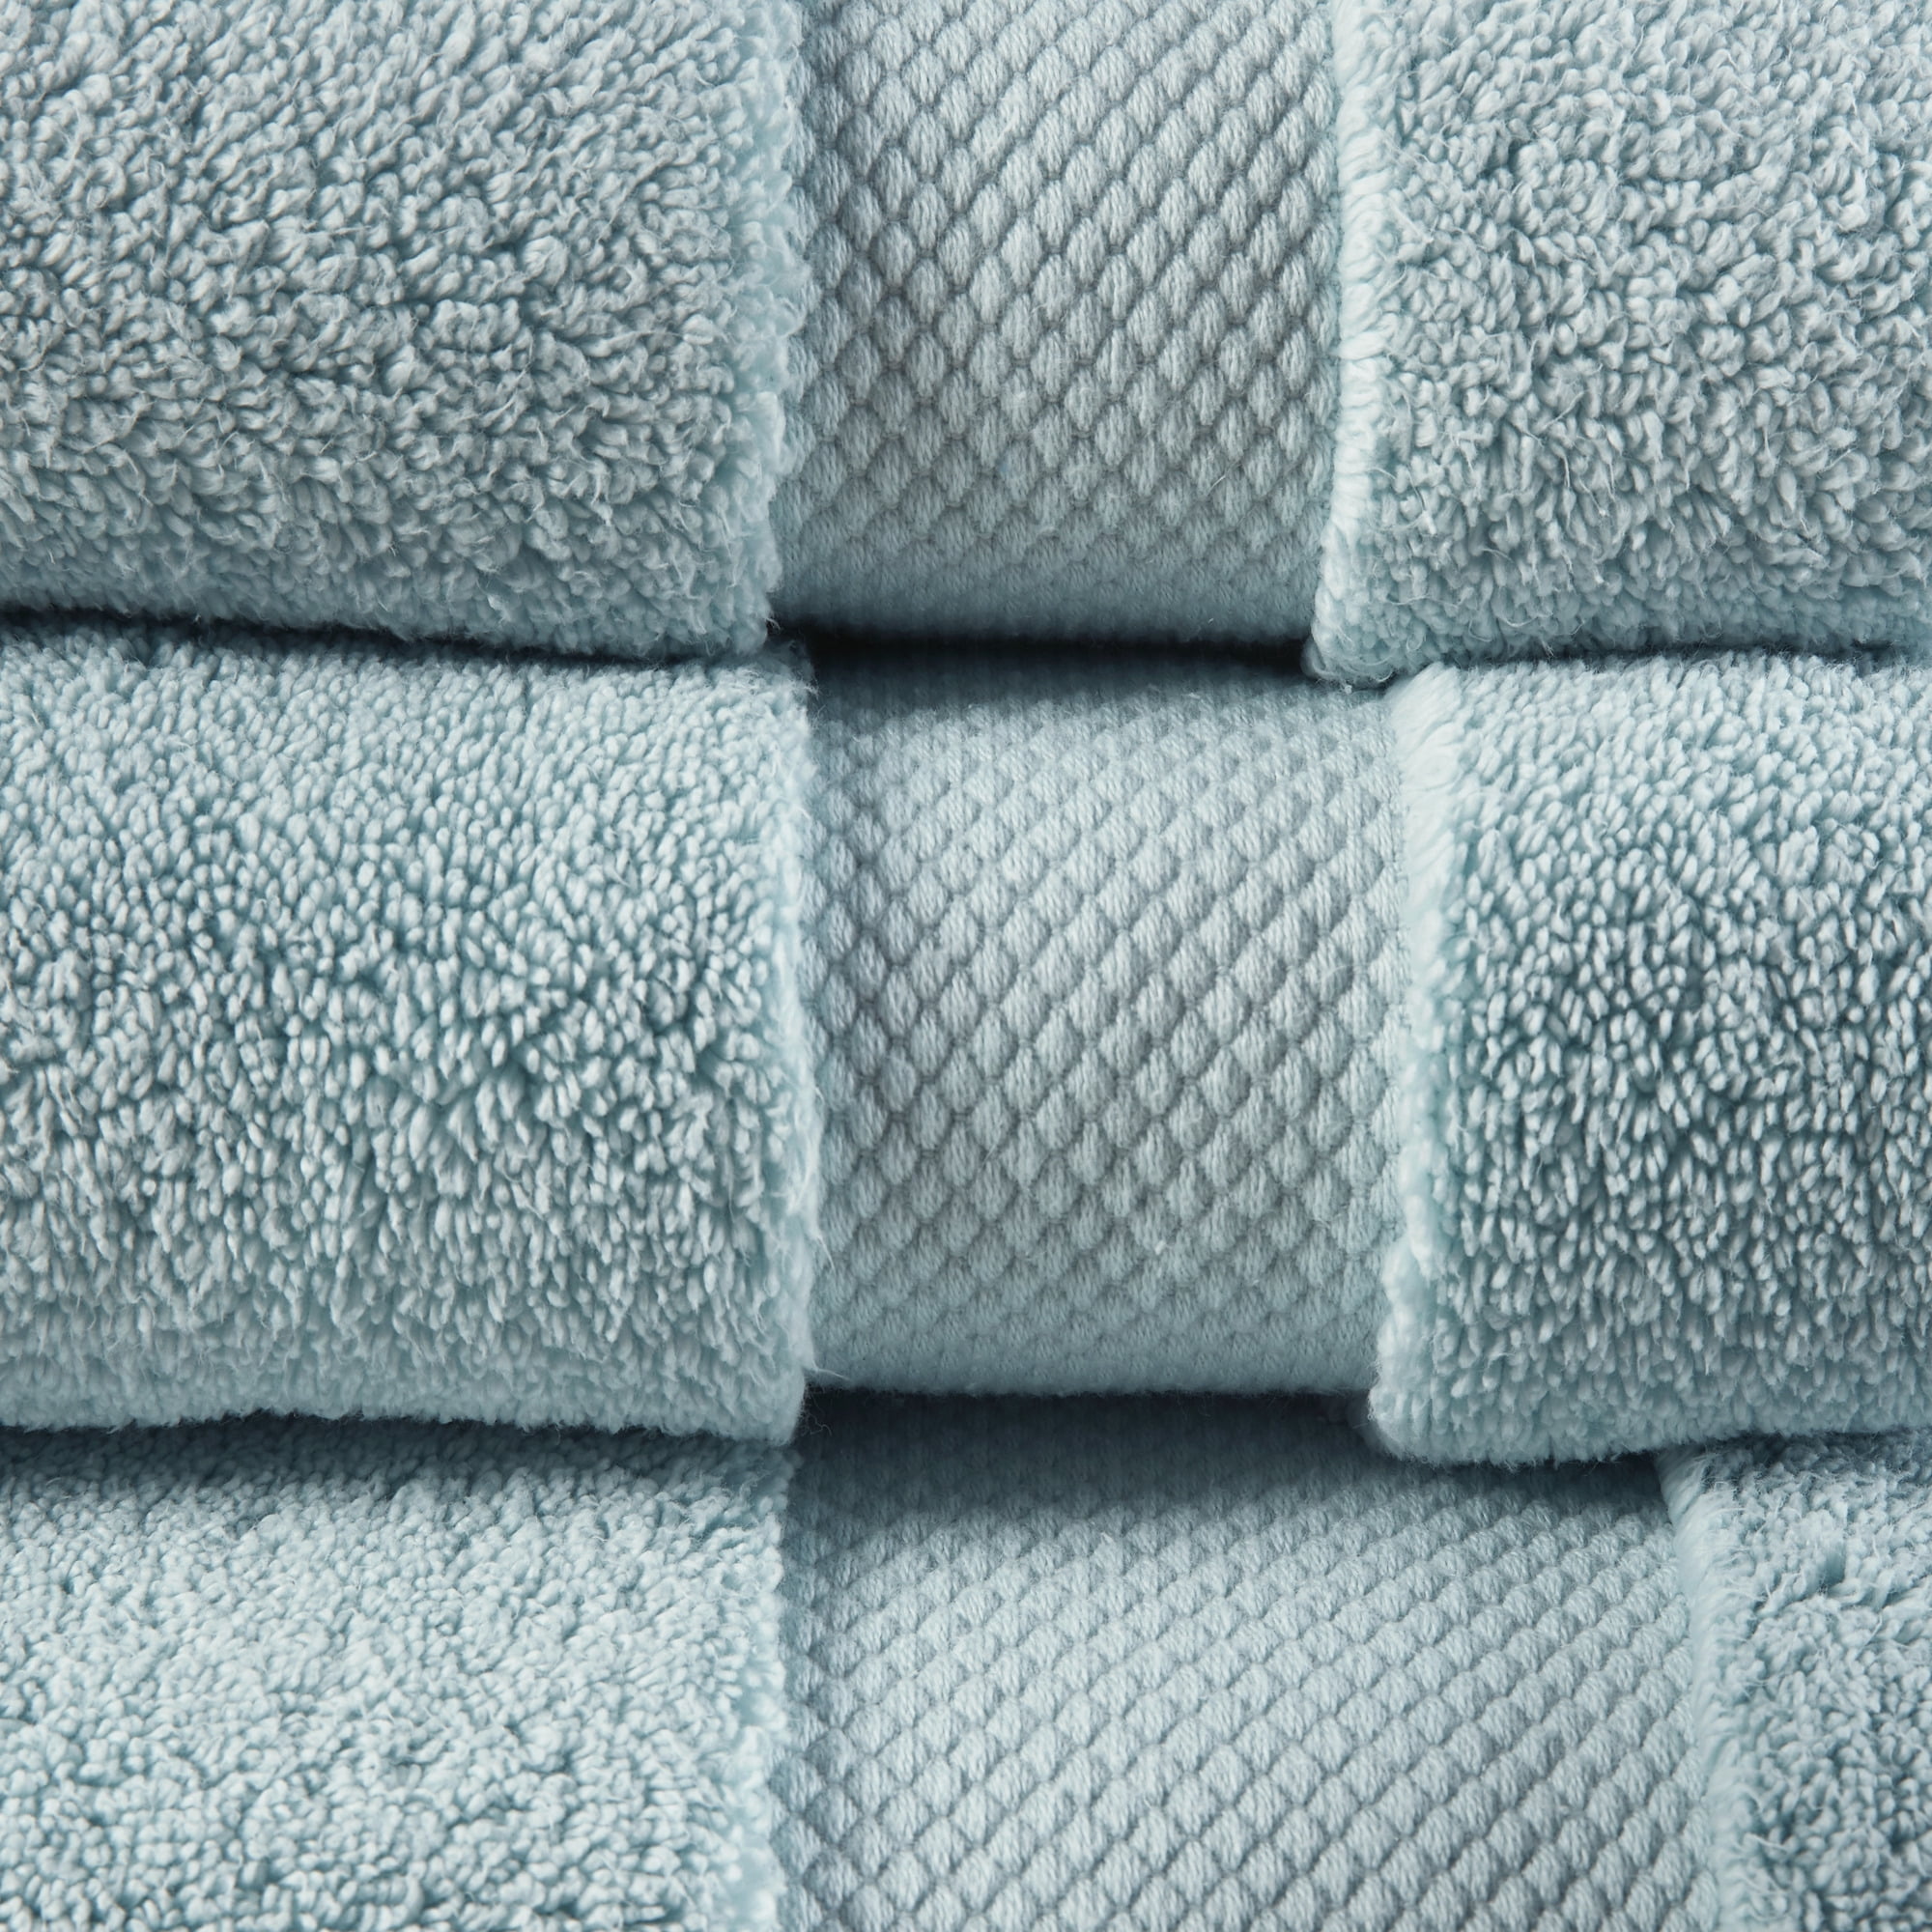 Home Sweet Home Dreams Inc 100% Cotton 6-Piece Hotel Quality Towel Set - Super Soft, and High Absorbent Bath Towel Set - 650 GSM